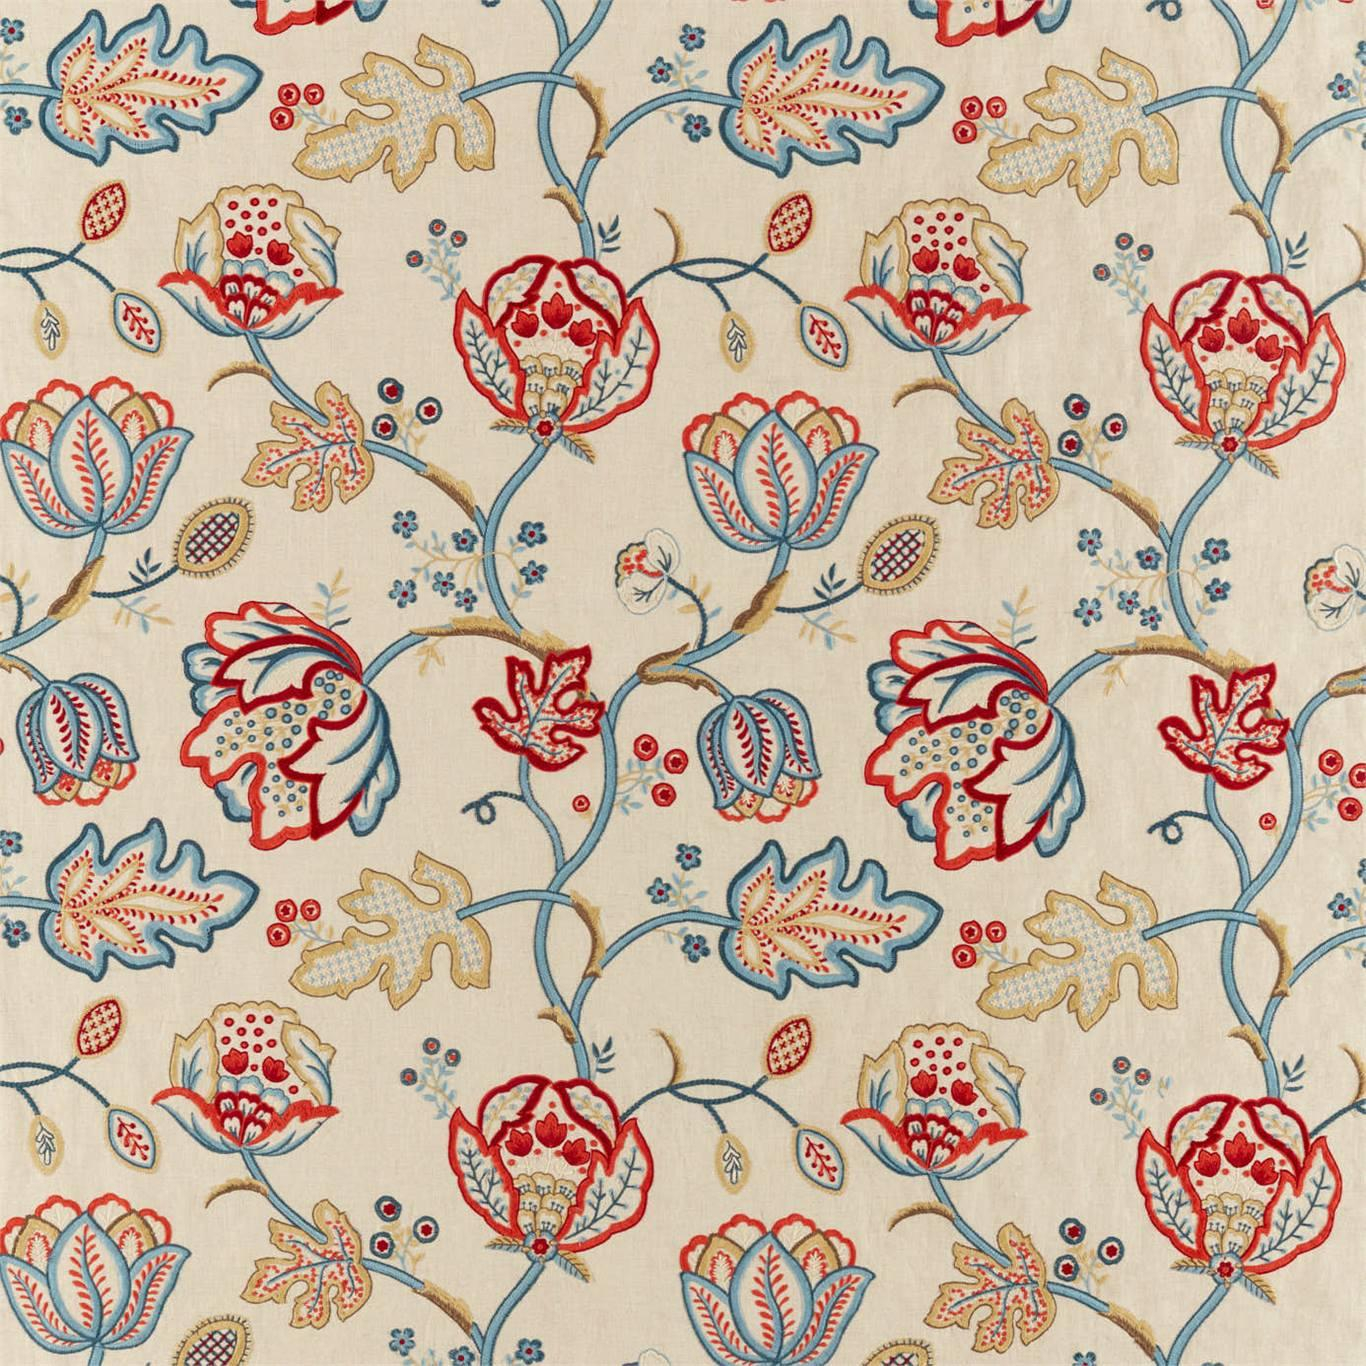 William Morris Embroidery Patterns Theodosia Embroidery Fabric Dm5f236822 William Morris Co